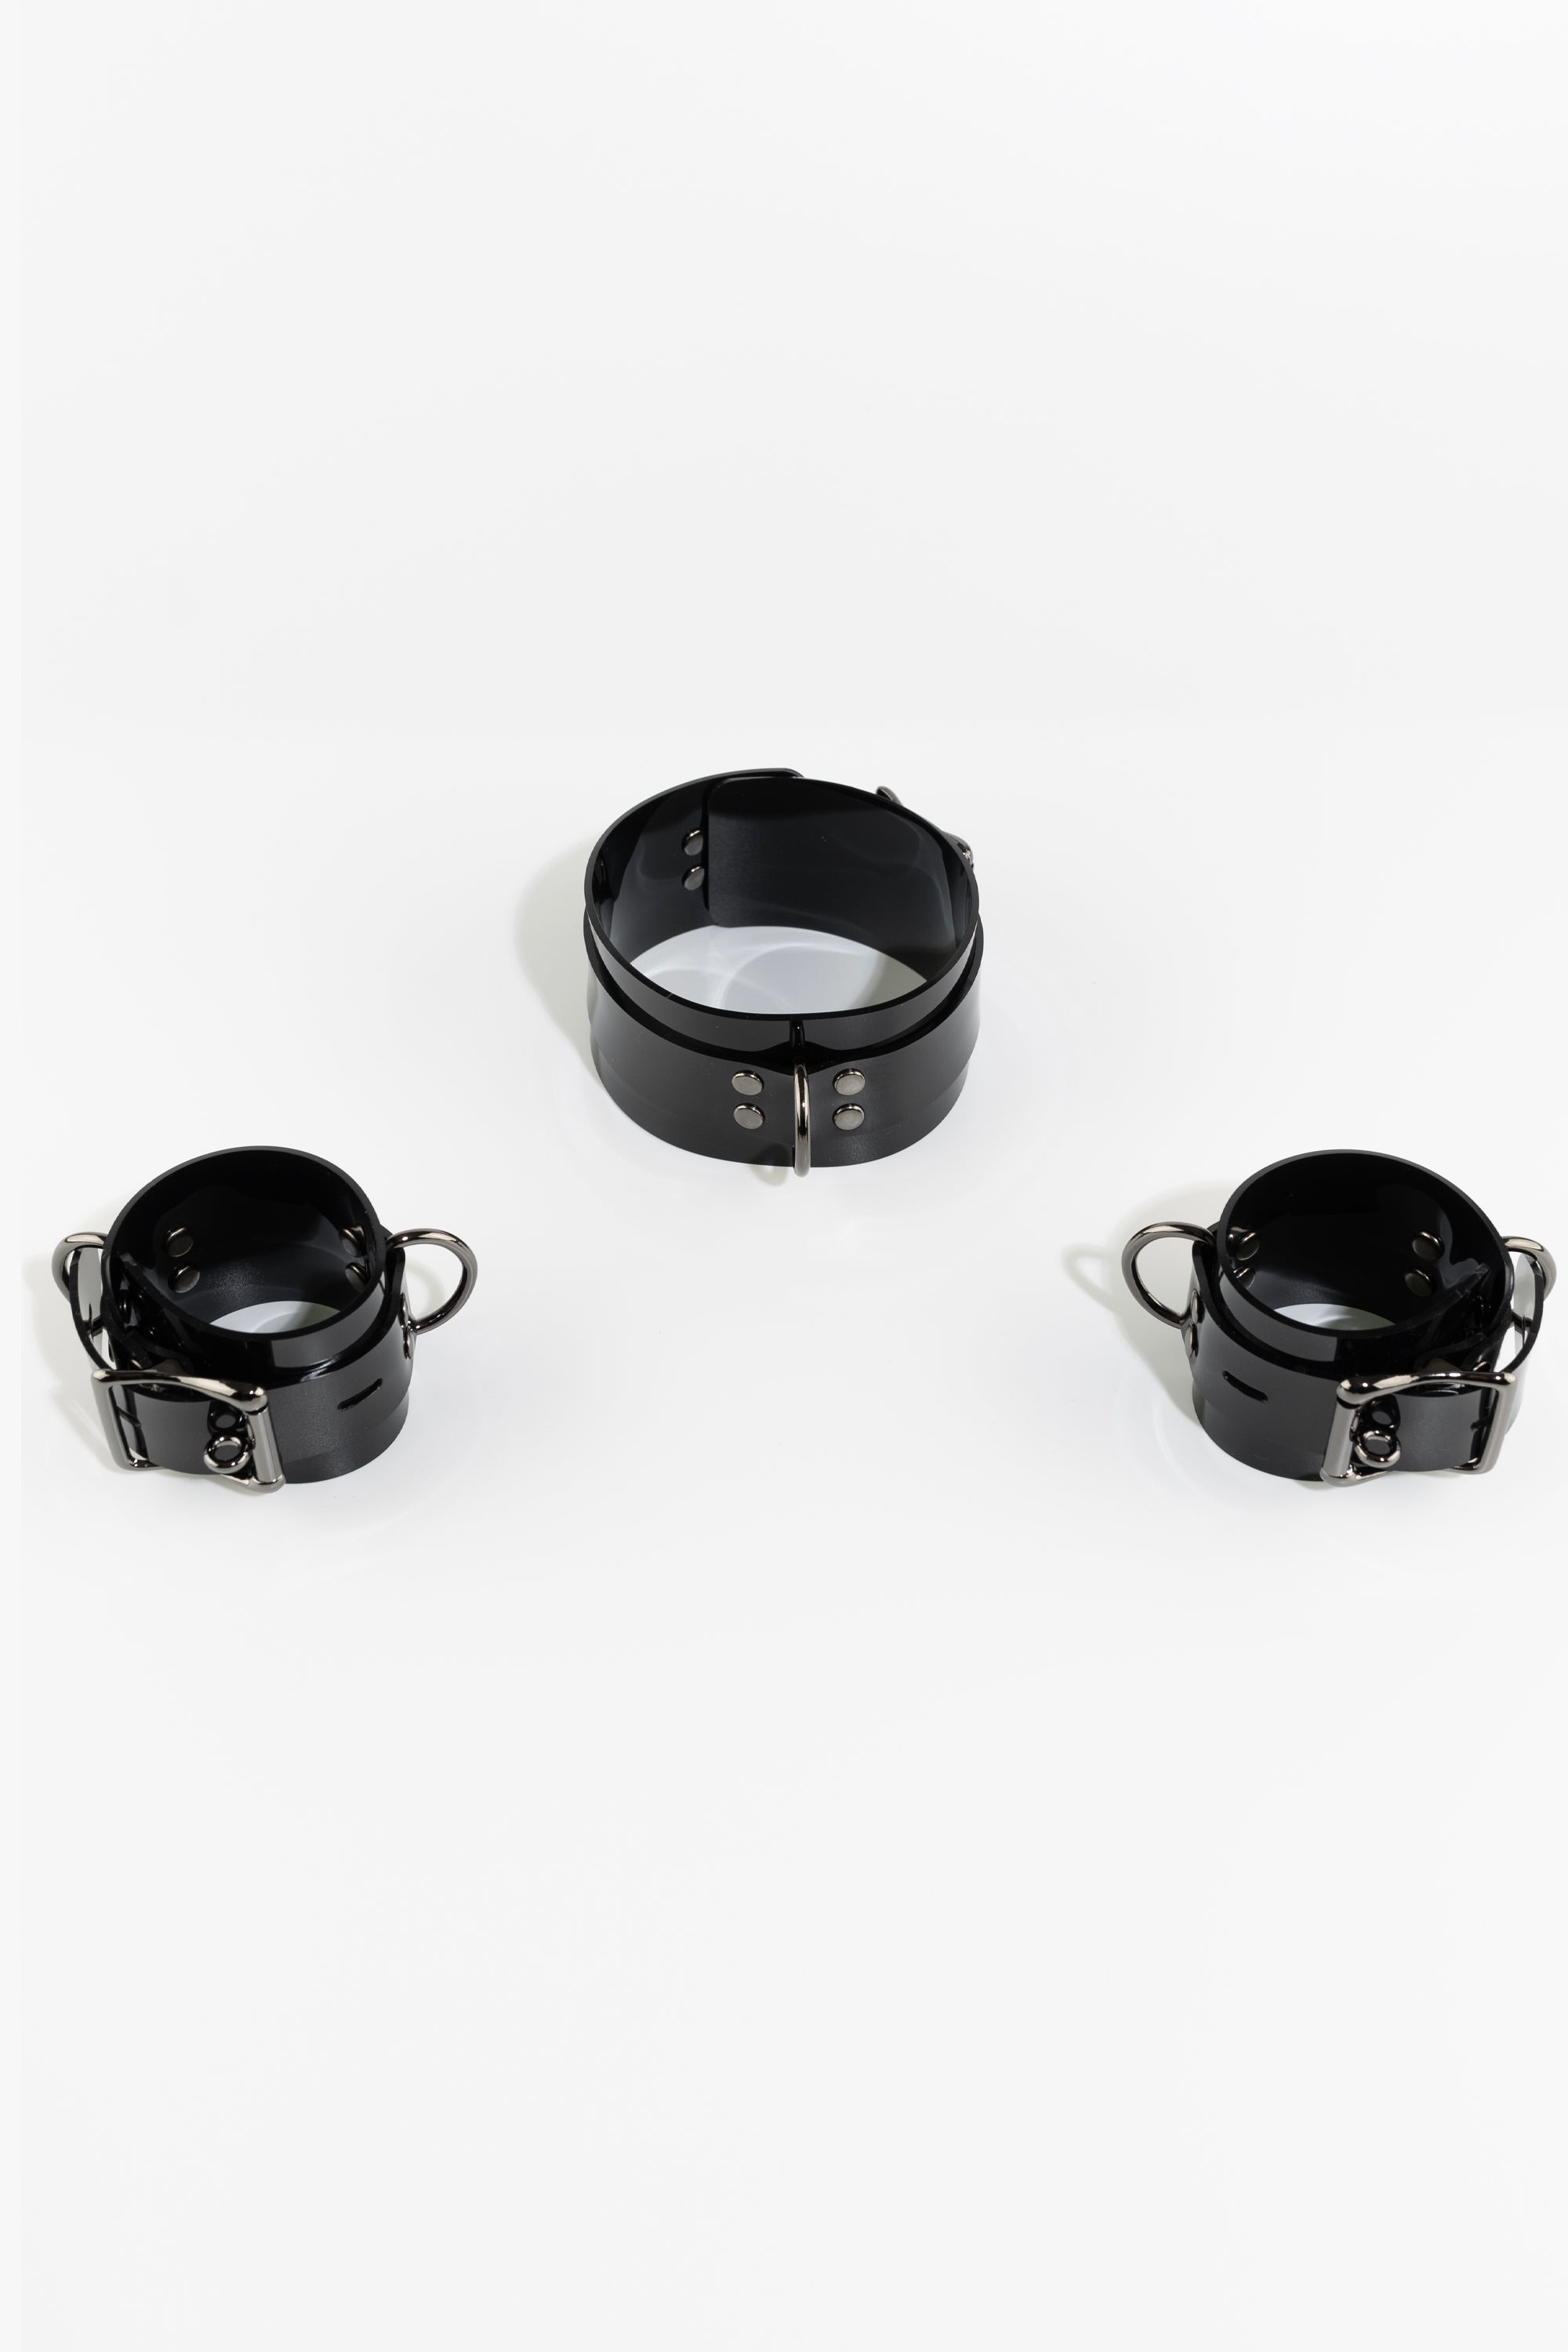 Lockable collar and wrist cuffs set, black/black